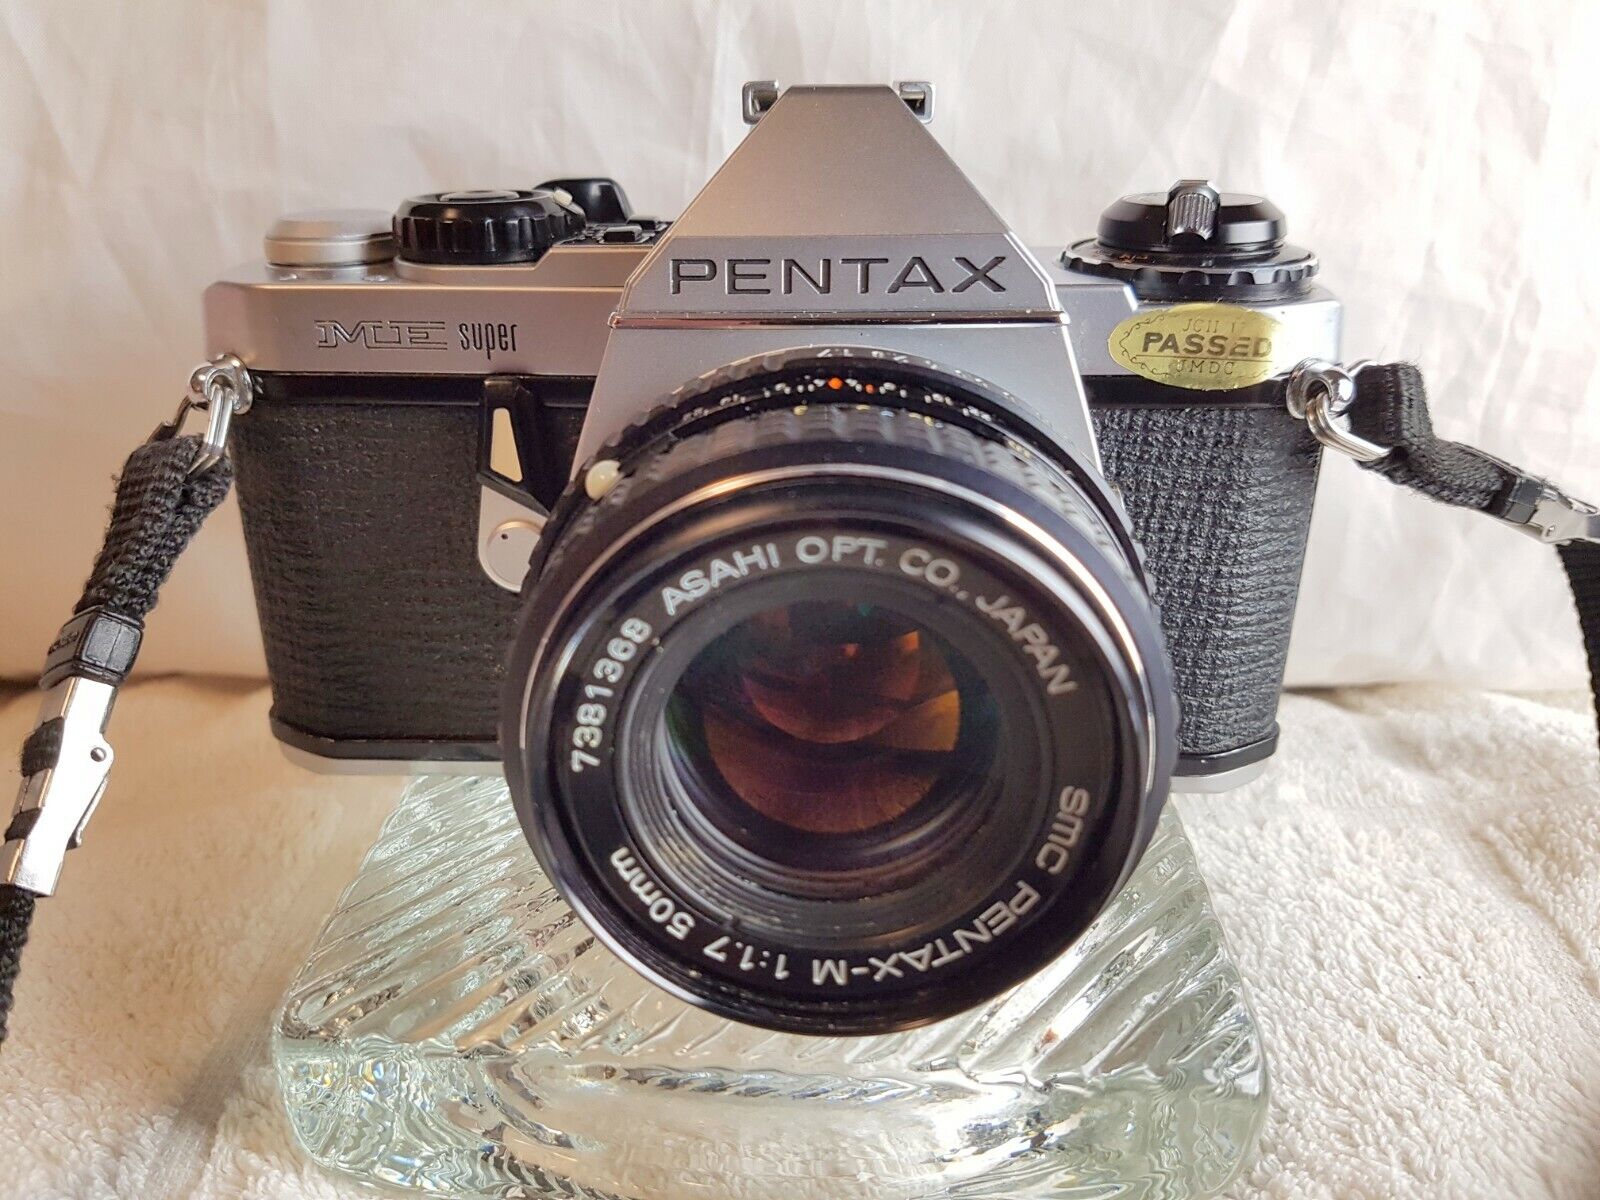 Pentax ME Super Camera with SMC Pentax-M 50mm f1.7 Lens. | eBay